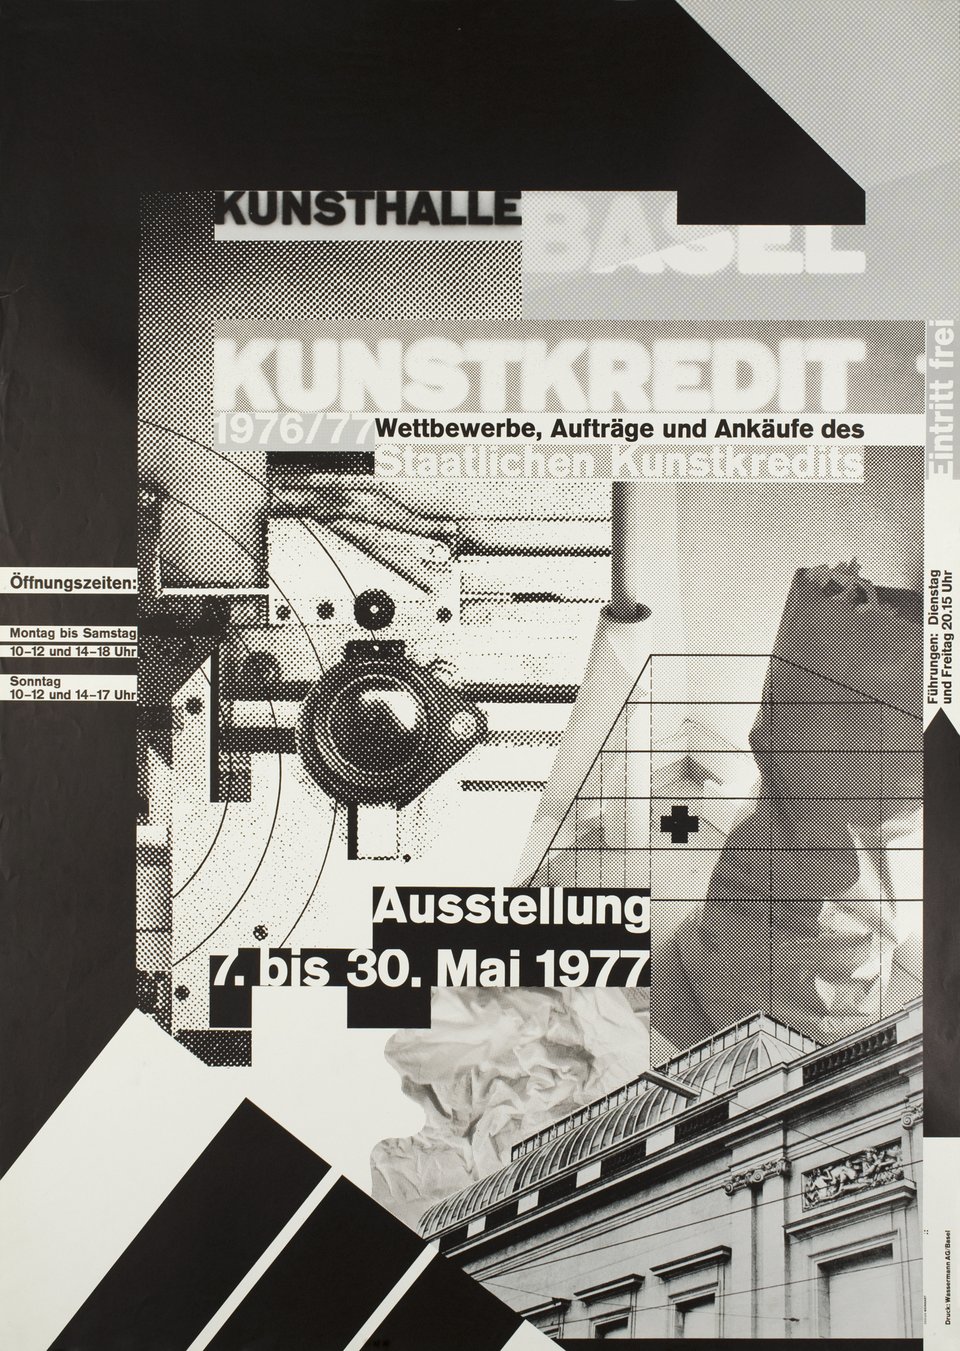 Wolfgang Weingart: Kunsthalle Basel Kunstkredit 76-77. 1977. Lithograph (128 x 90.2 cm)